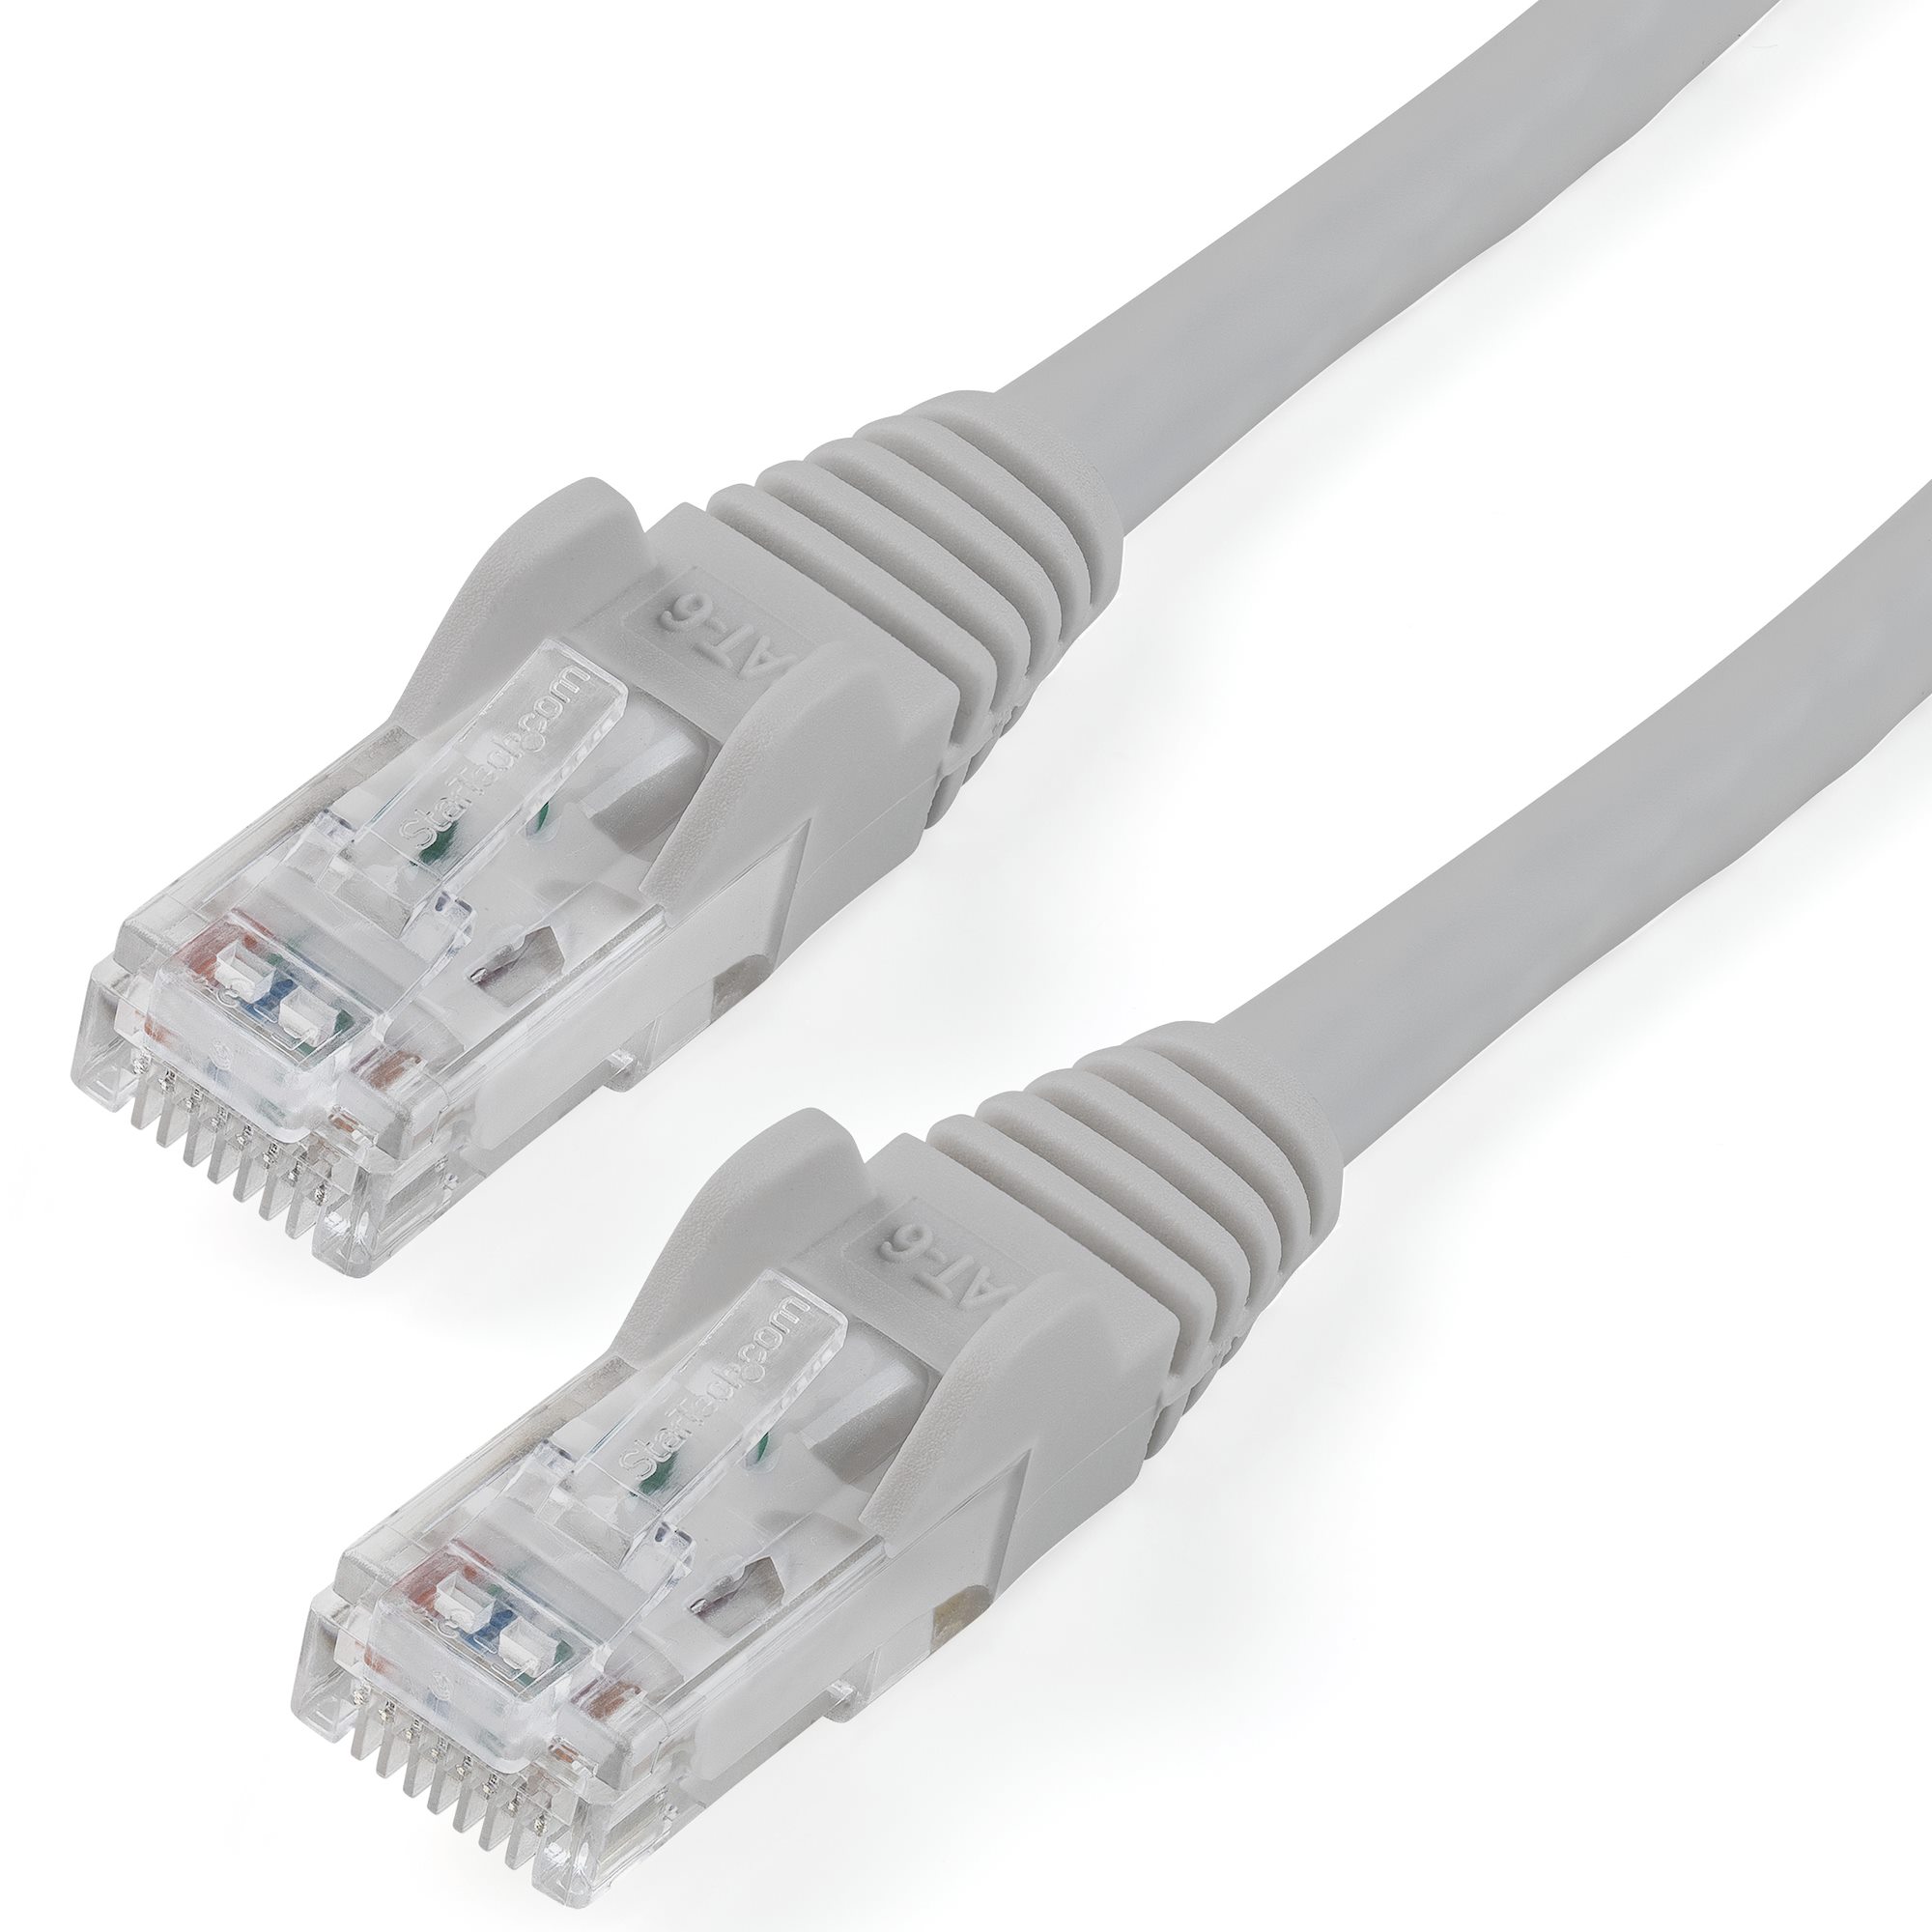 5m Black Ethernet Cable Cat5e RJ45 Home Office Network Patch Lead 100% Copper 